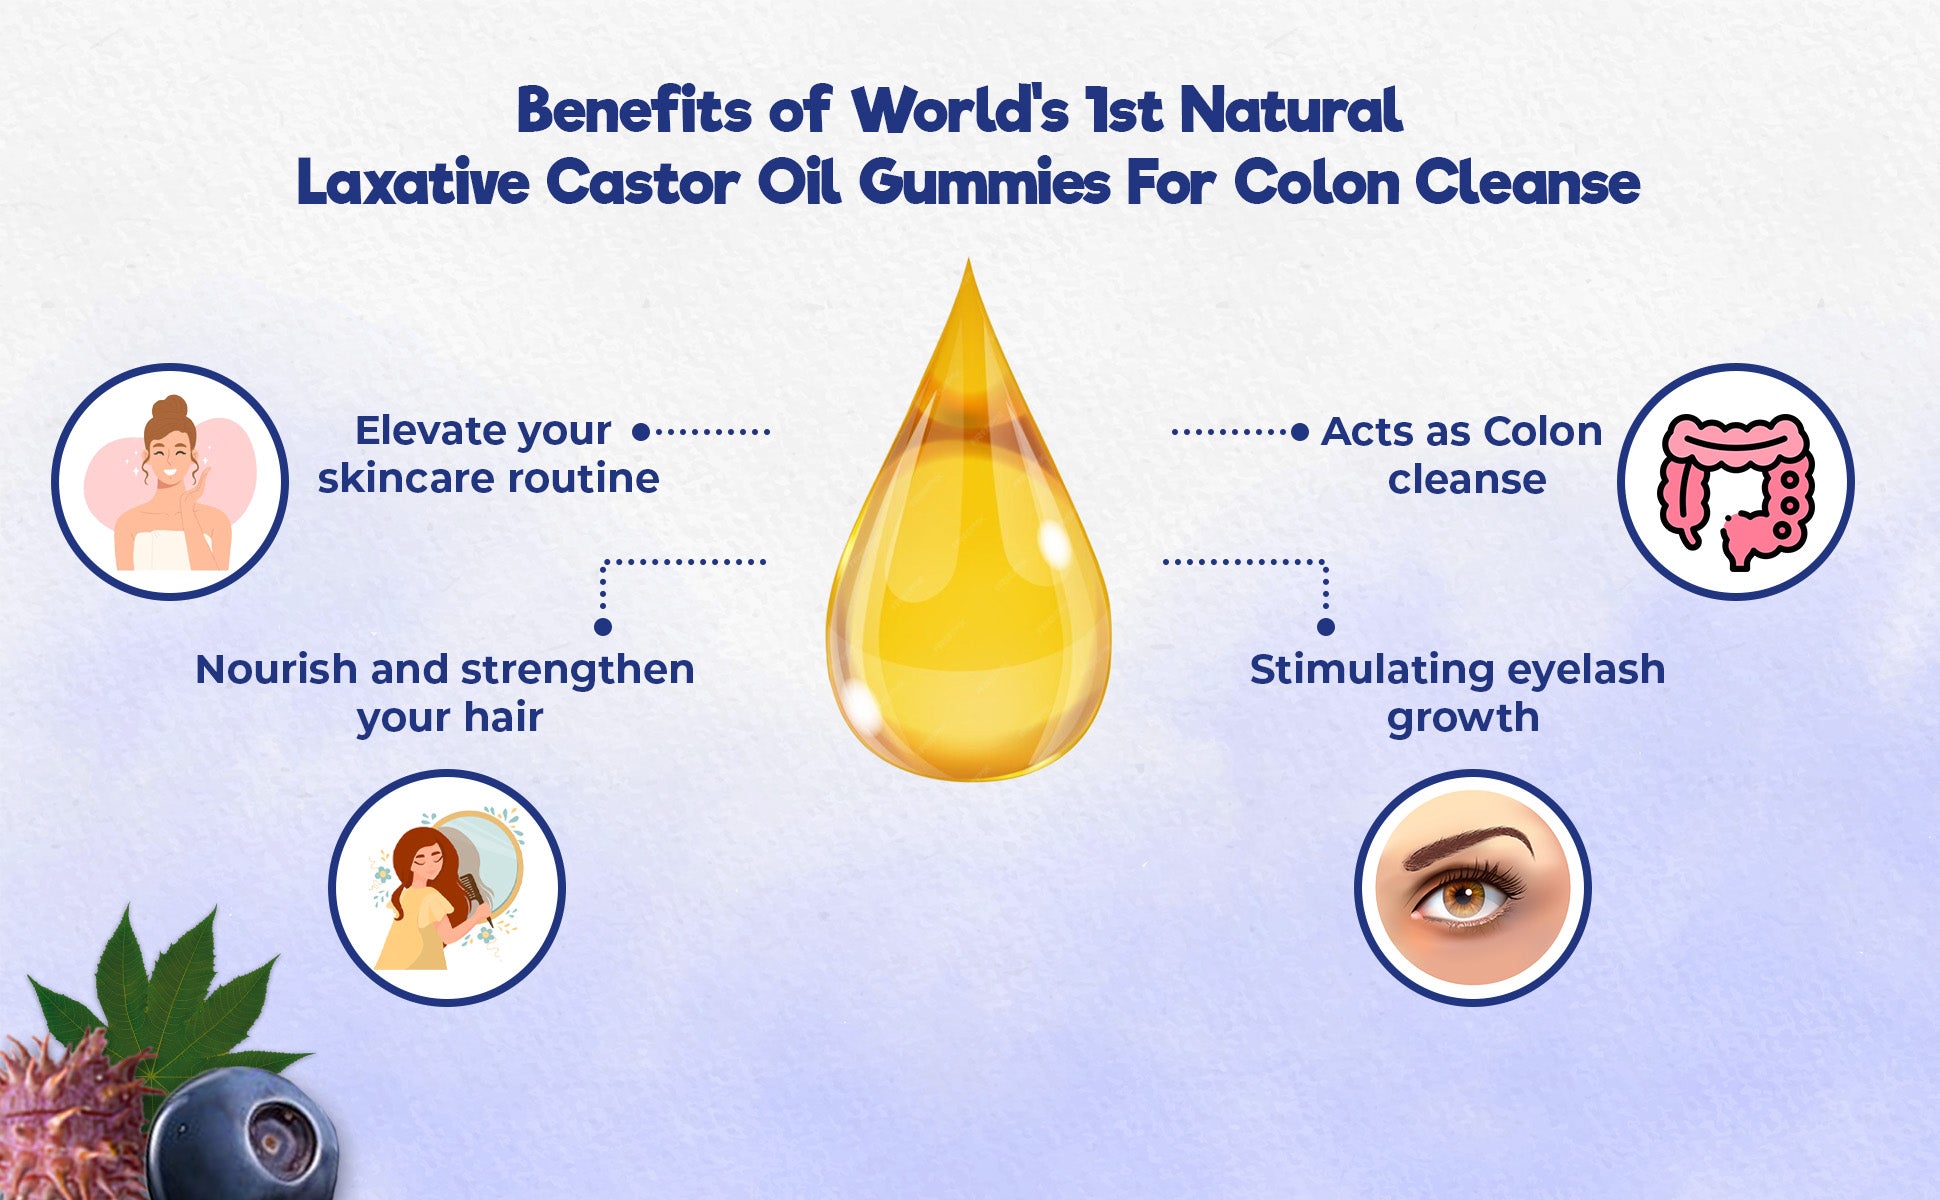 Benefits of Castor Oil for Colon Health in Castor Oil Gummies form